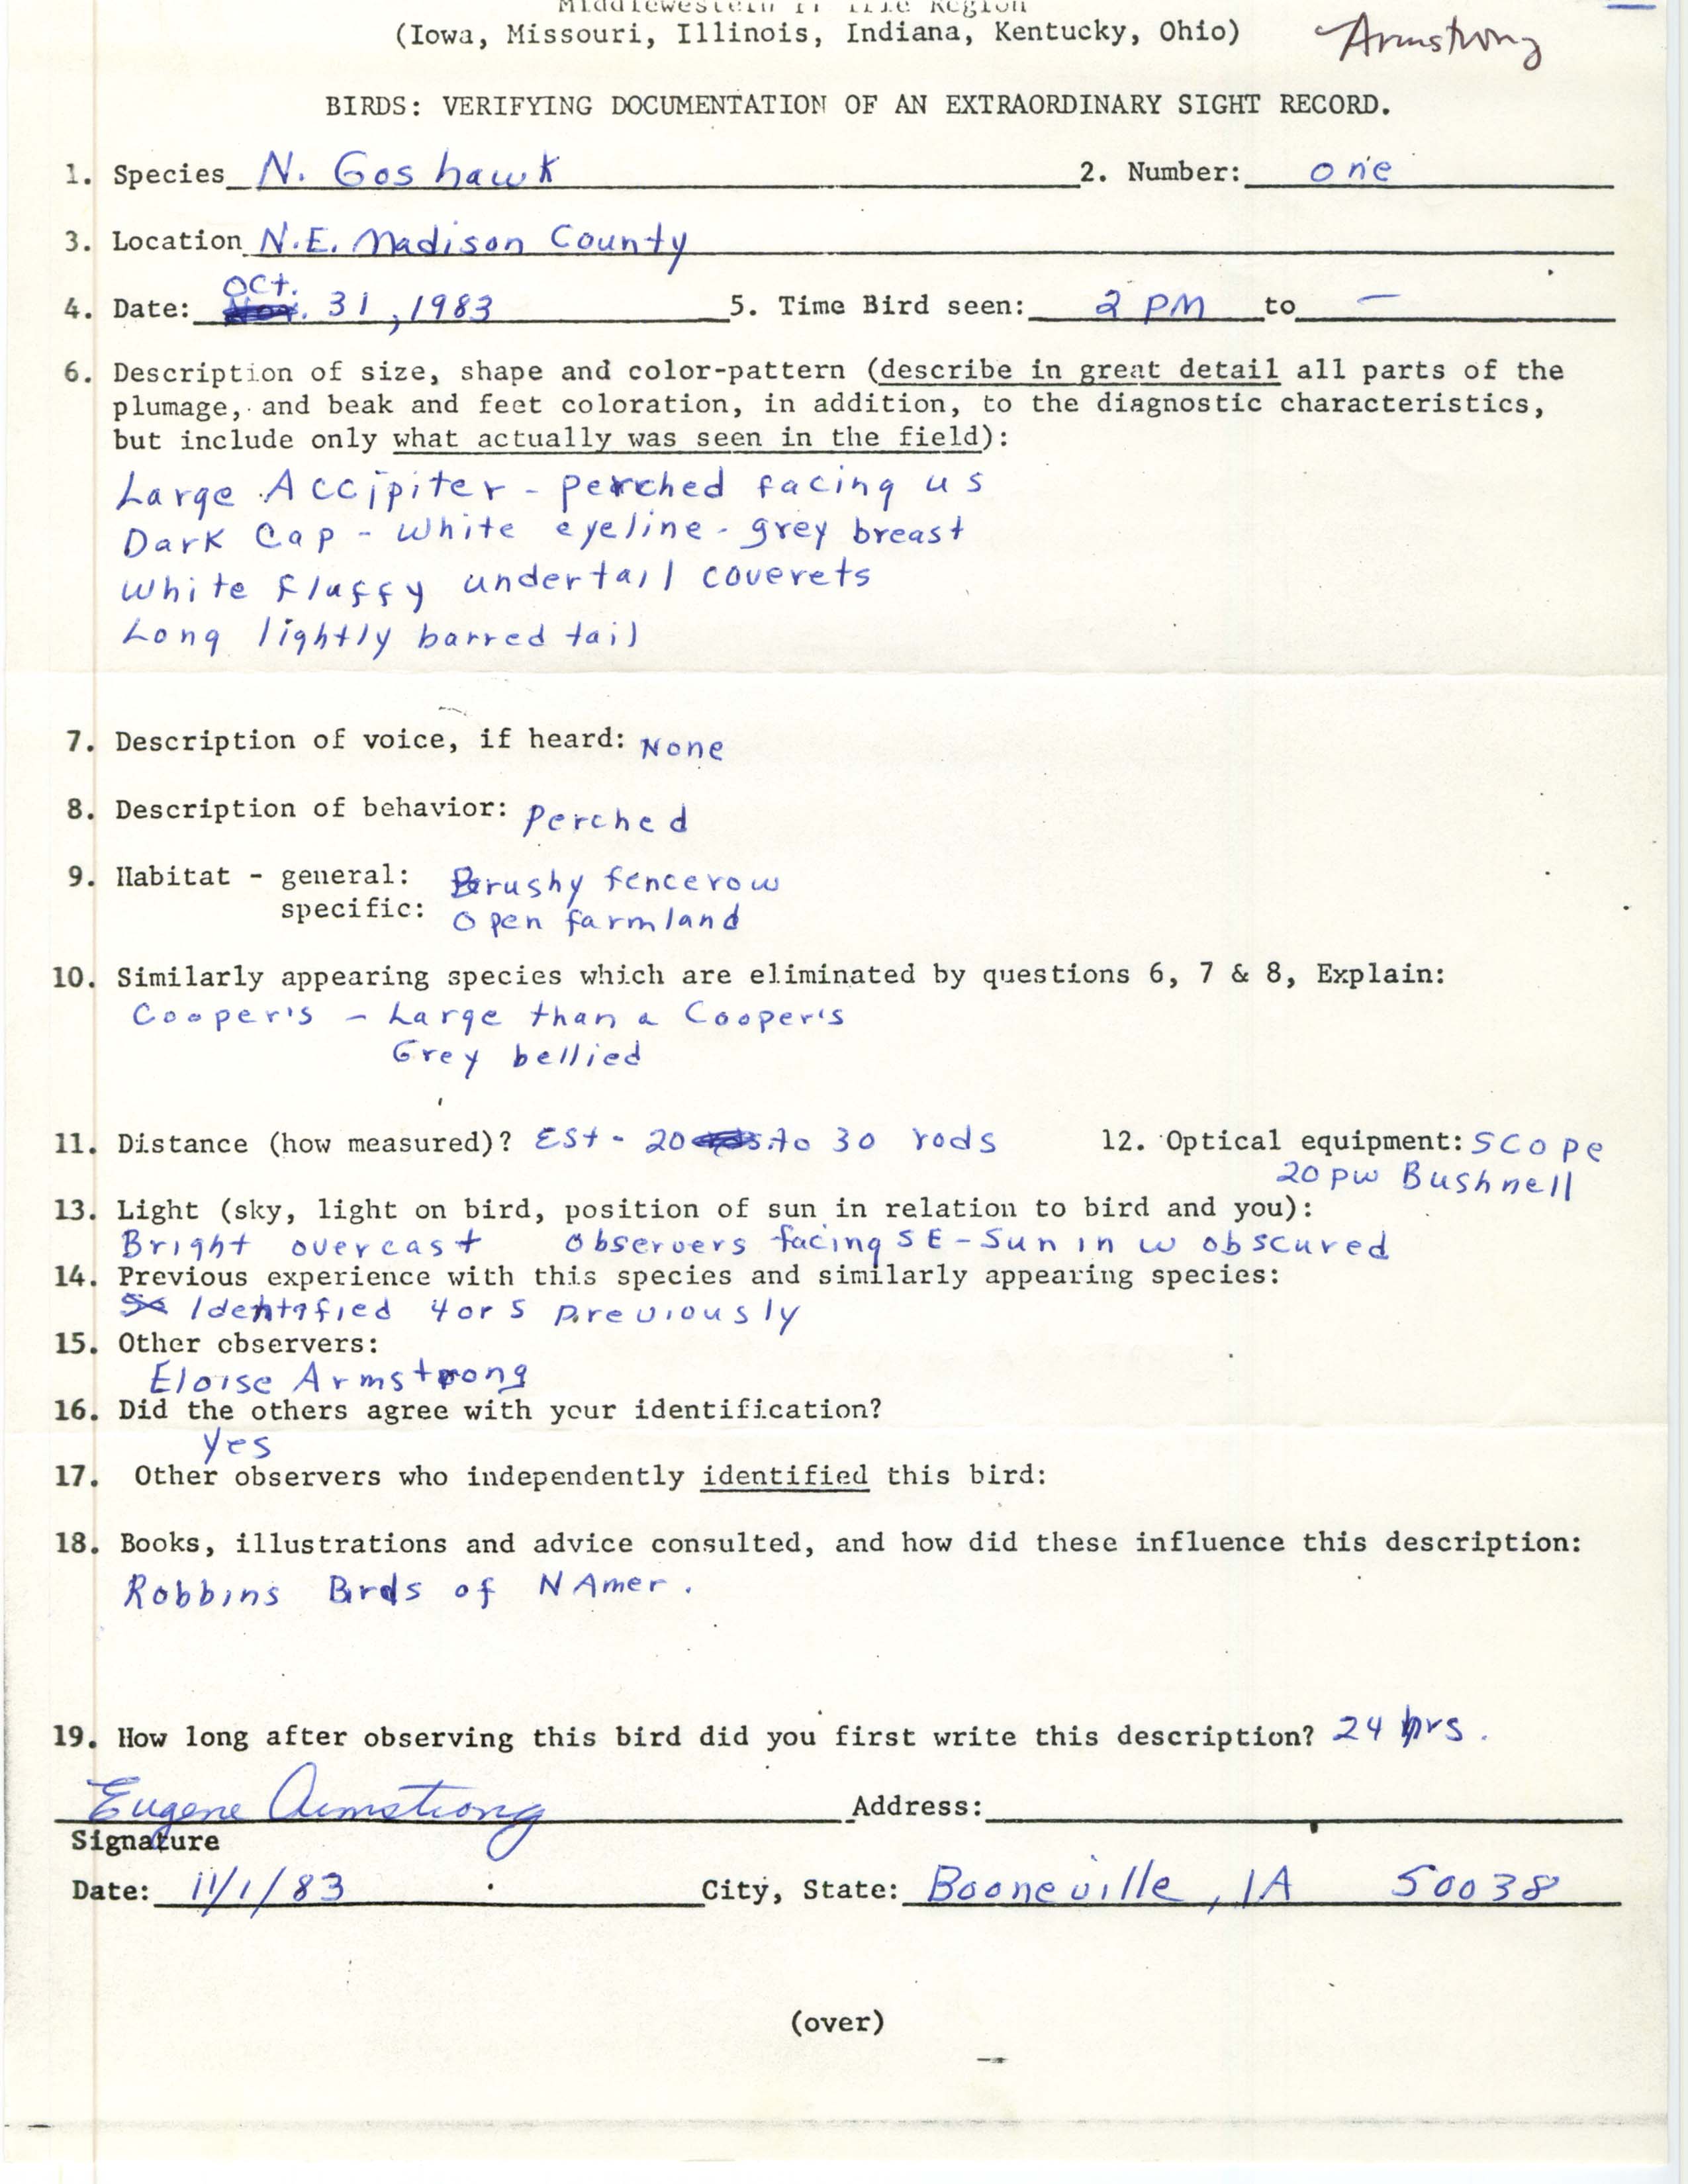 Rare bird documentation form for Northern Goshawk at Madison County, 1983